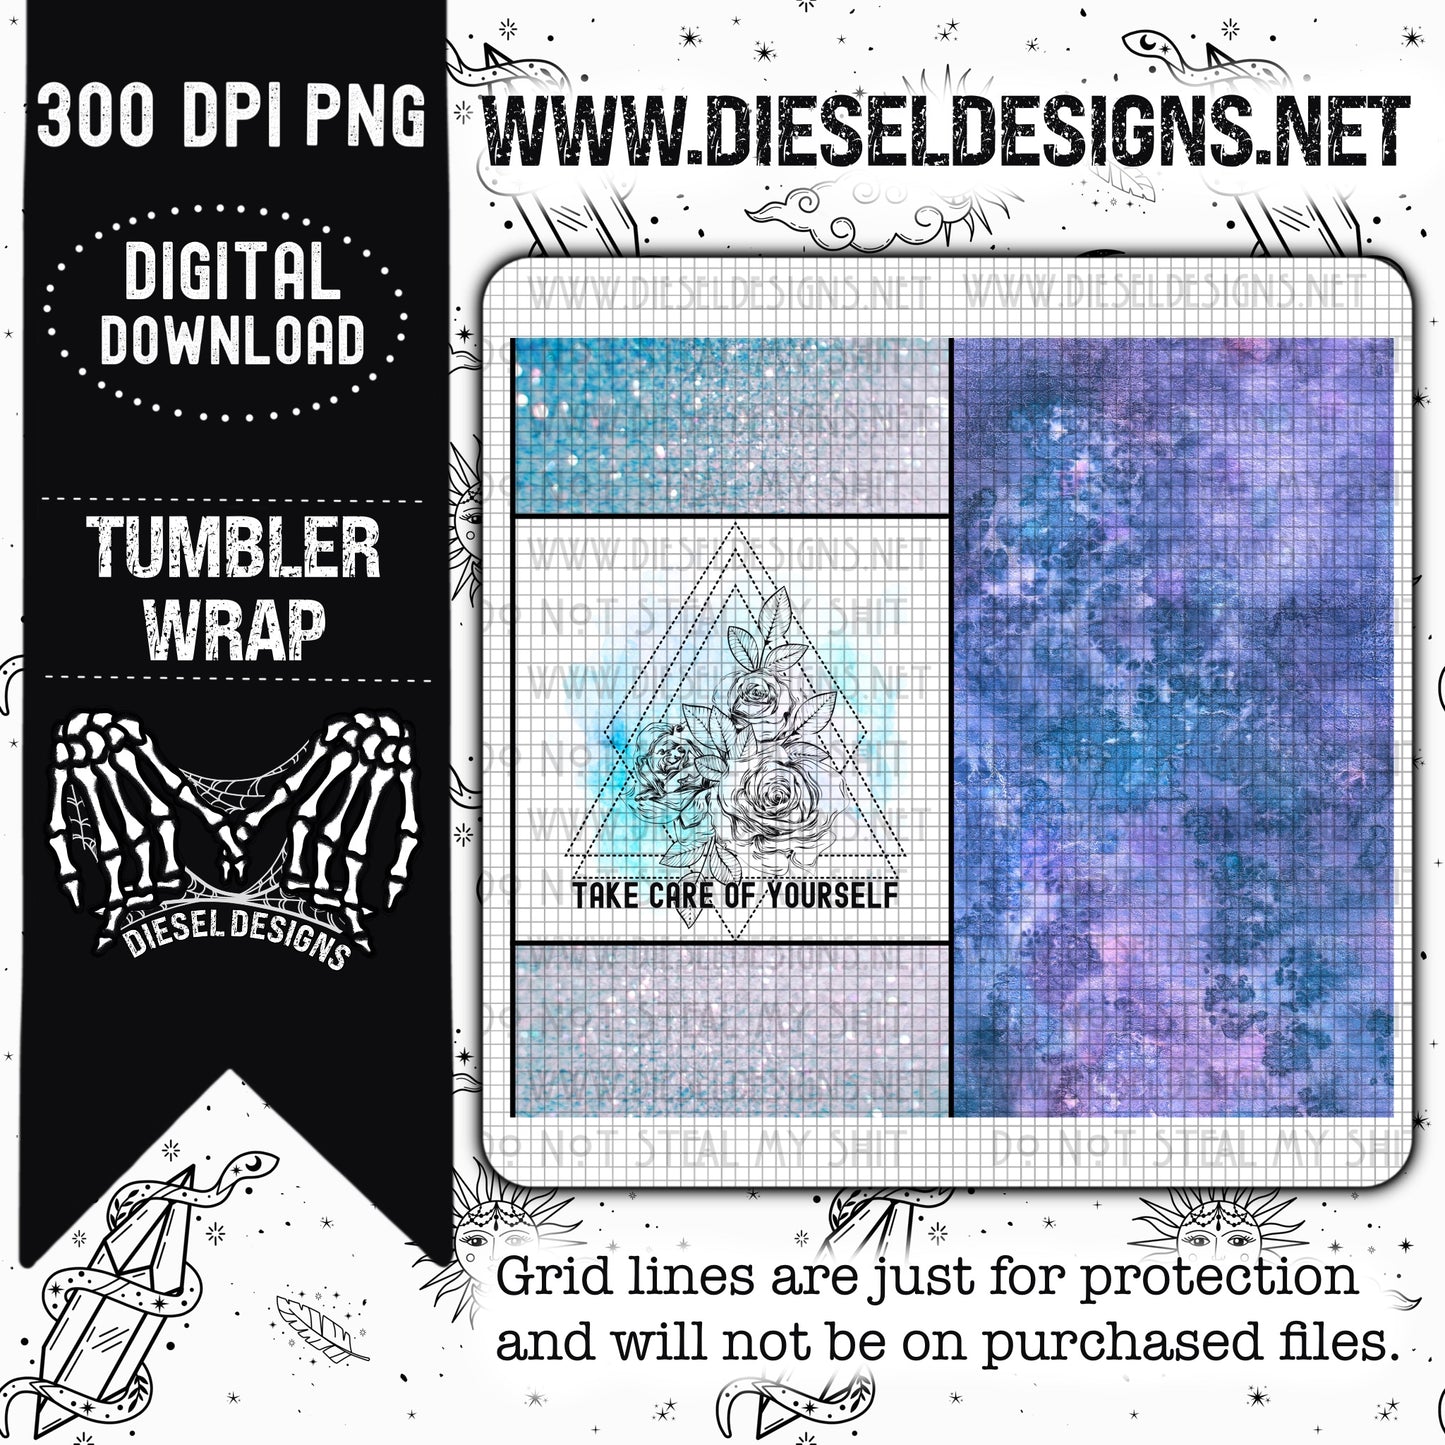 MENTAL HEALTH bundle by Diesel Designs | 300 DPI | PNG | Seamless | Tumbler Wraps | Collab |